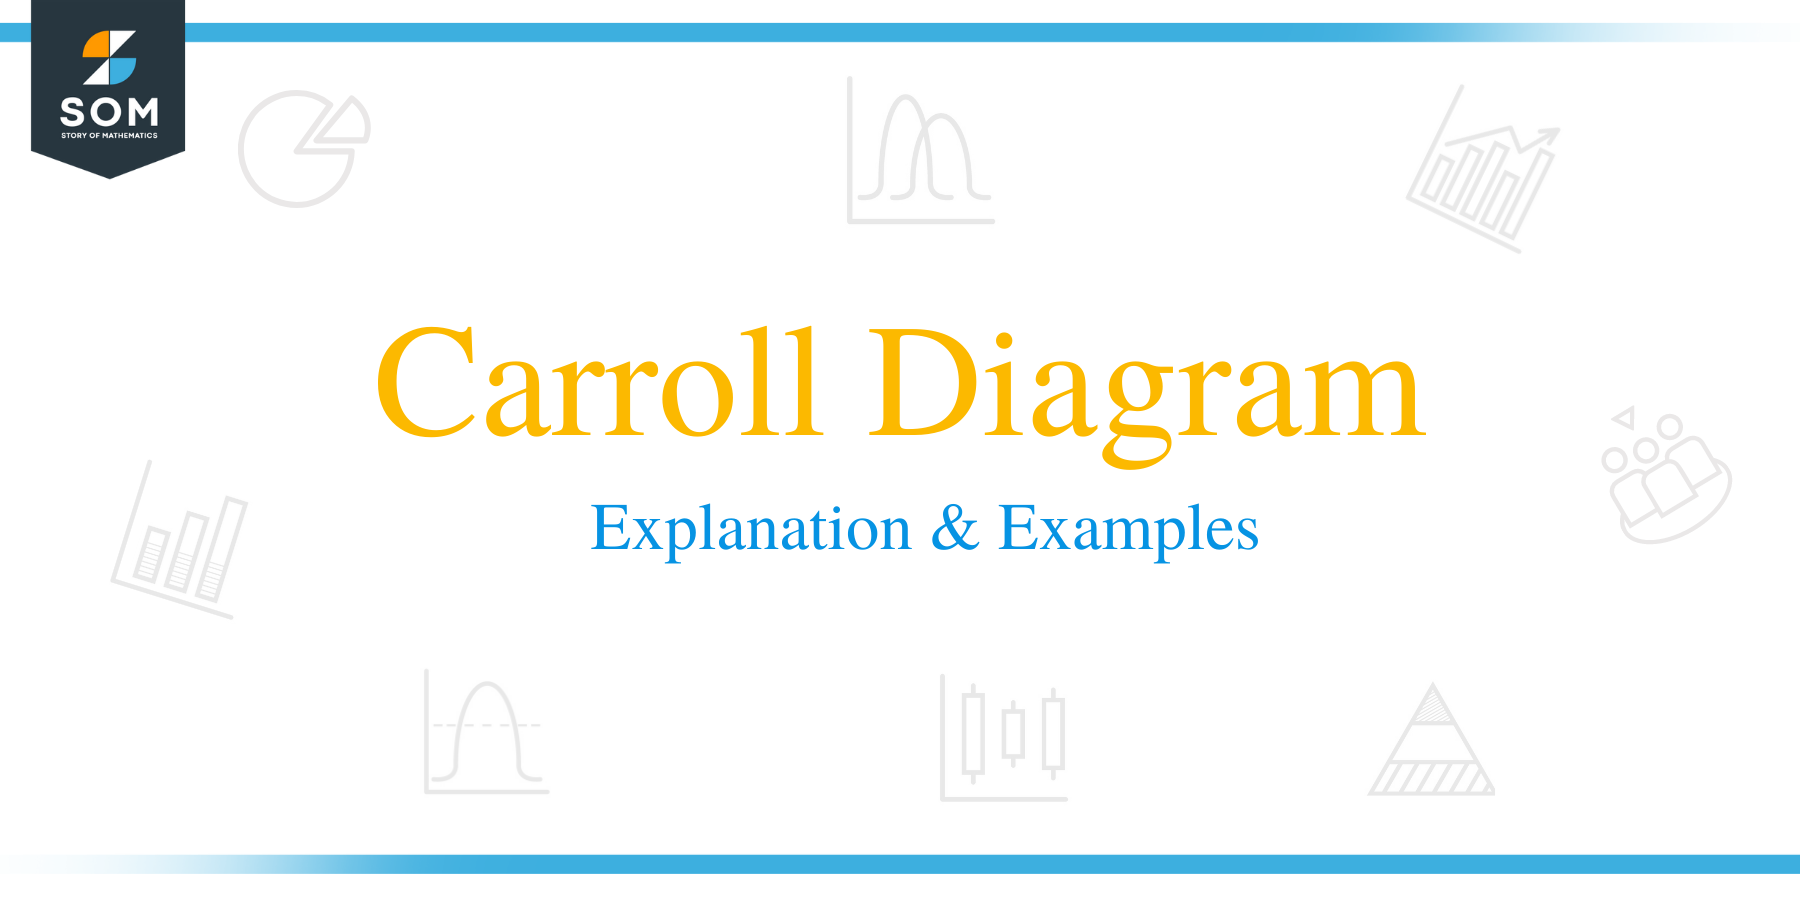 Carroll diagram